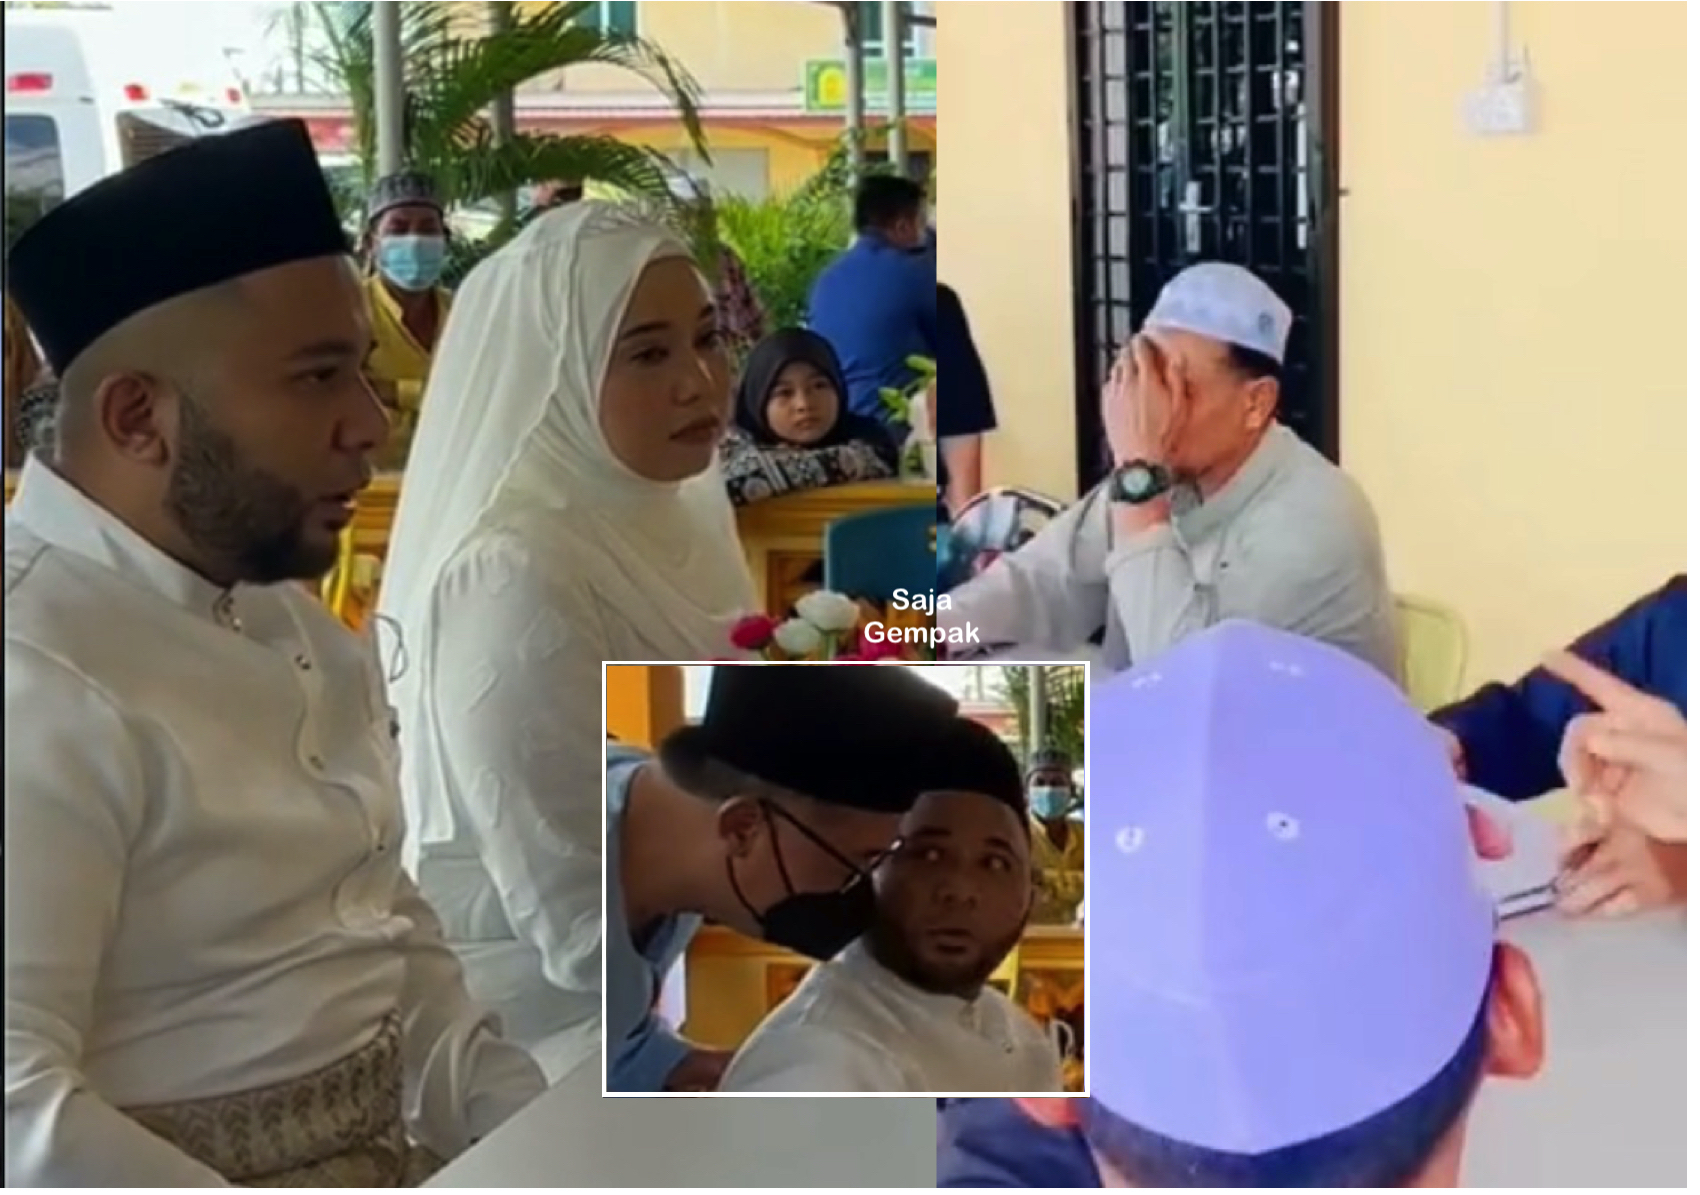 'Nervous' Punya Pasal, Pengantin Tersasul Sebut Mas Kahwin Sebanyak RM500 Juta - sajagempak.com